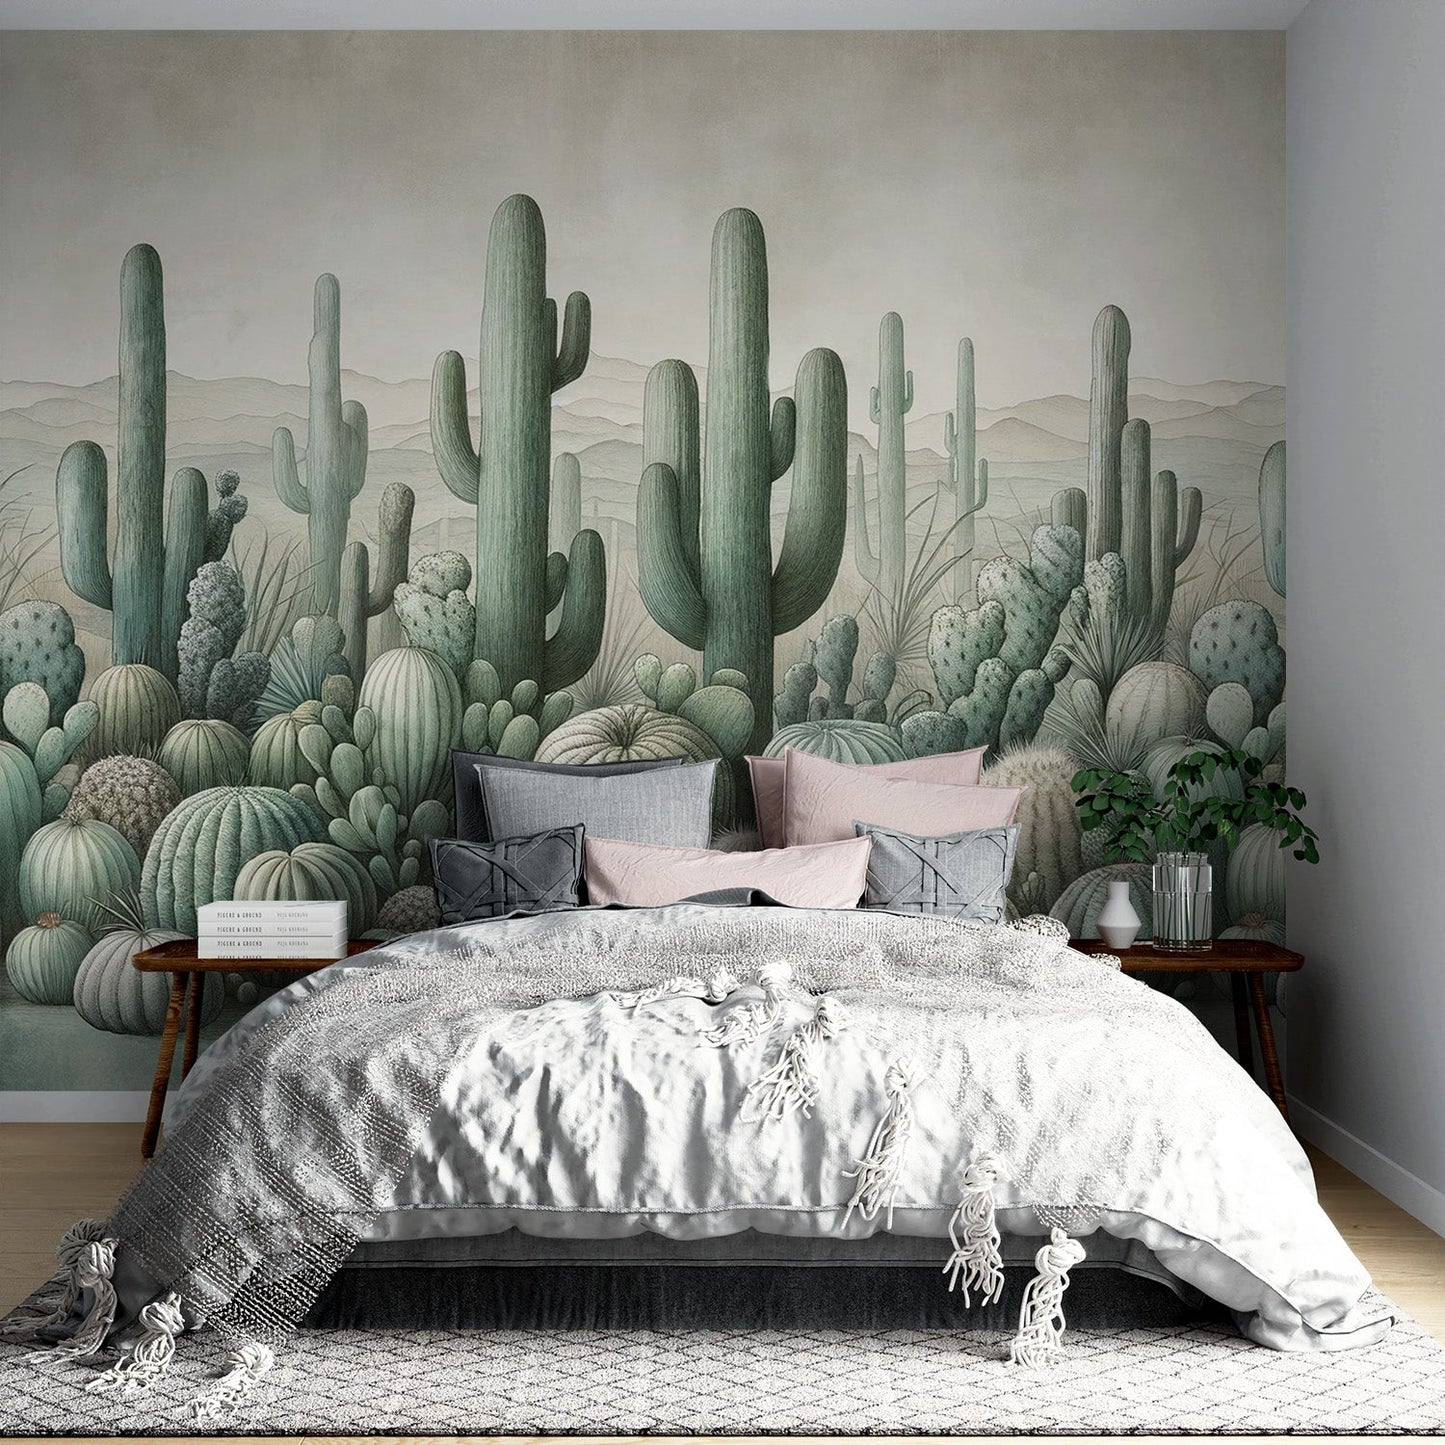 Green cactus wallpaper | Neutral colours and misshapen cacti